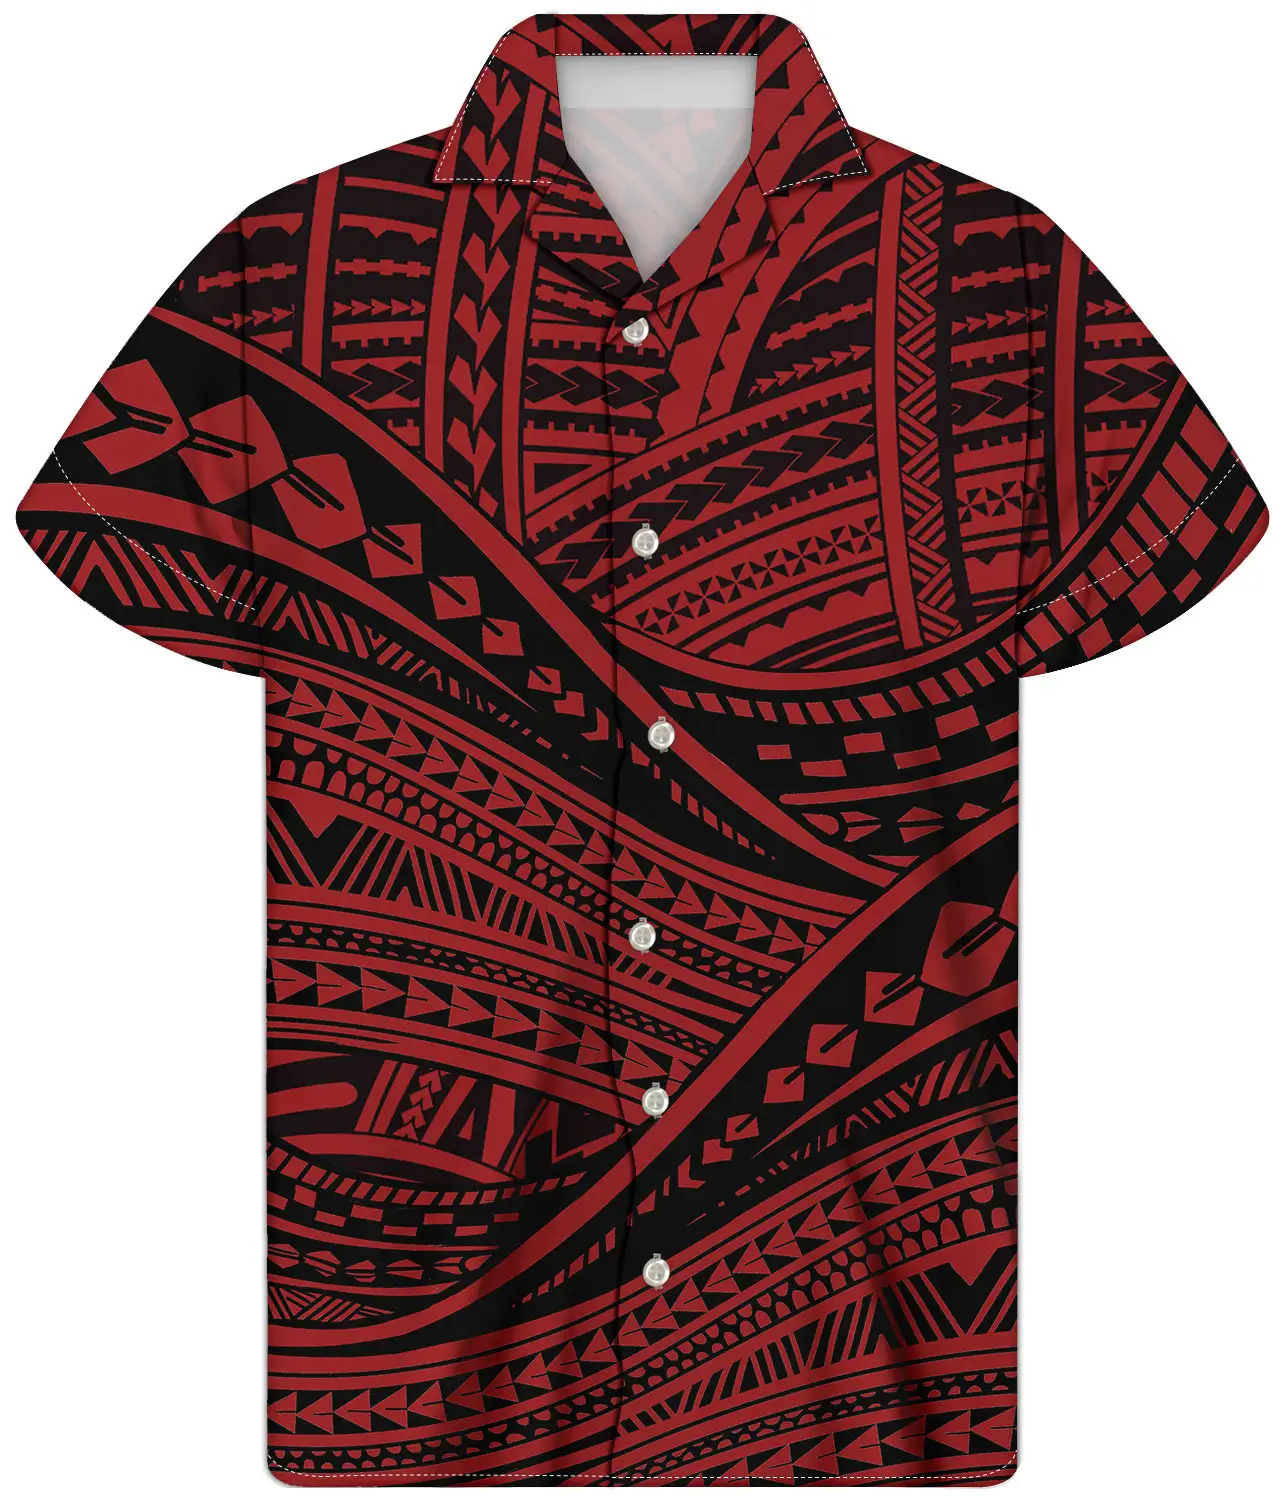 Camisa de tartaruga roupa casual masculina, camisa de tartaruga vermelha, poliéster, com estampa tribais, para meninos, vintage